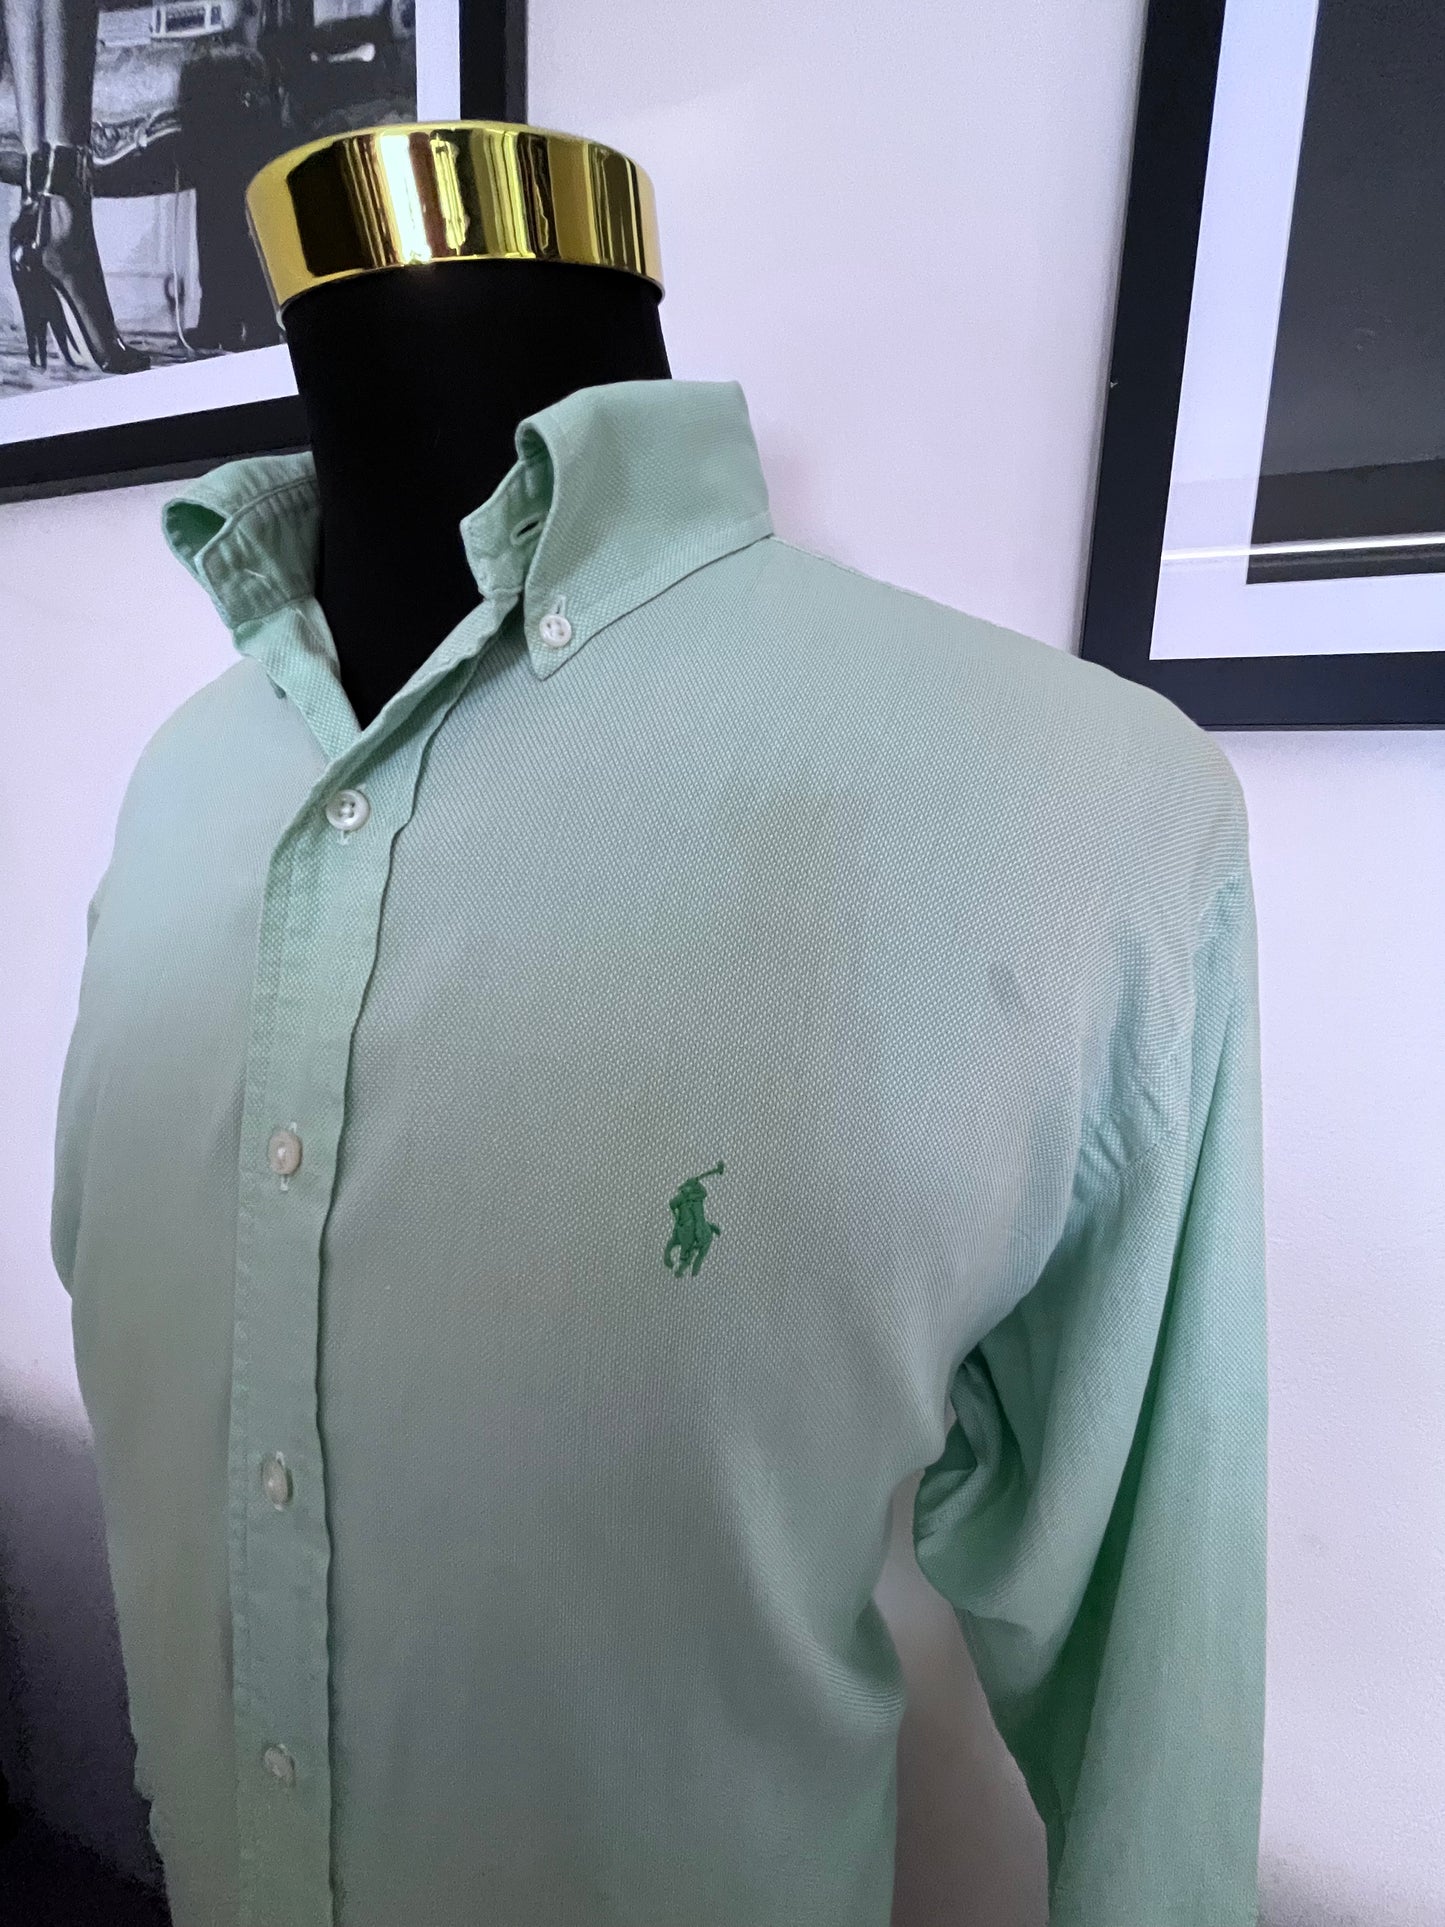 Ralph Lauren 100% Cotton Green Button Down Shirt Size L Classic Fit, Fits L to XL